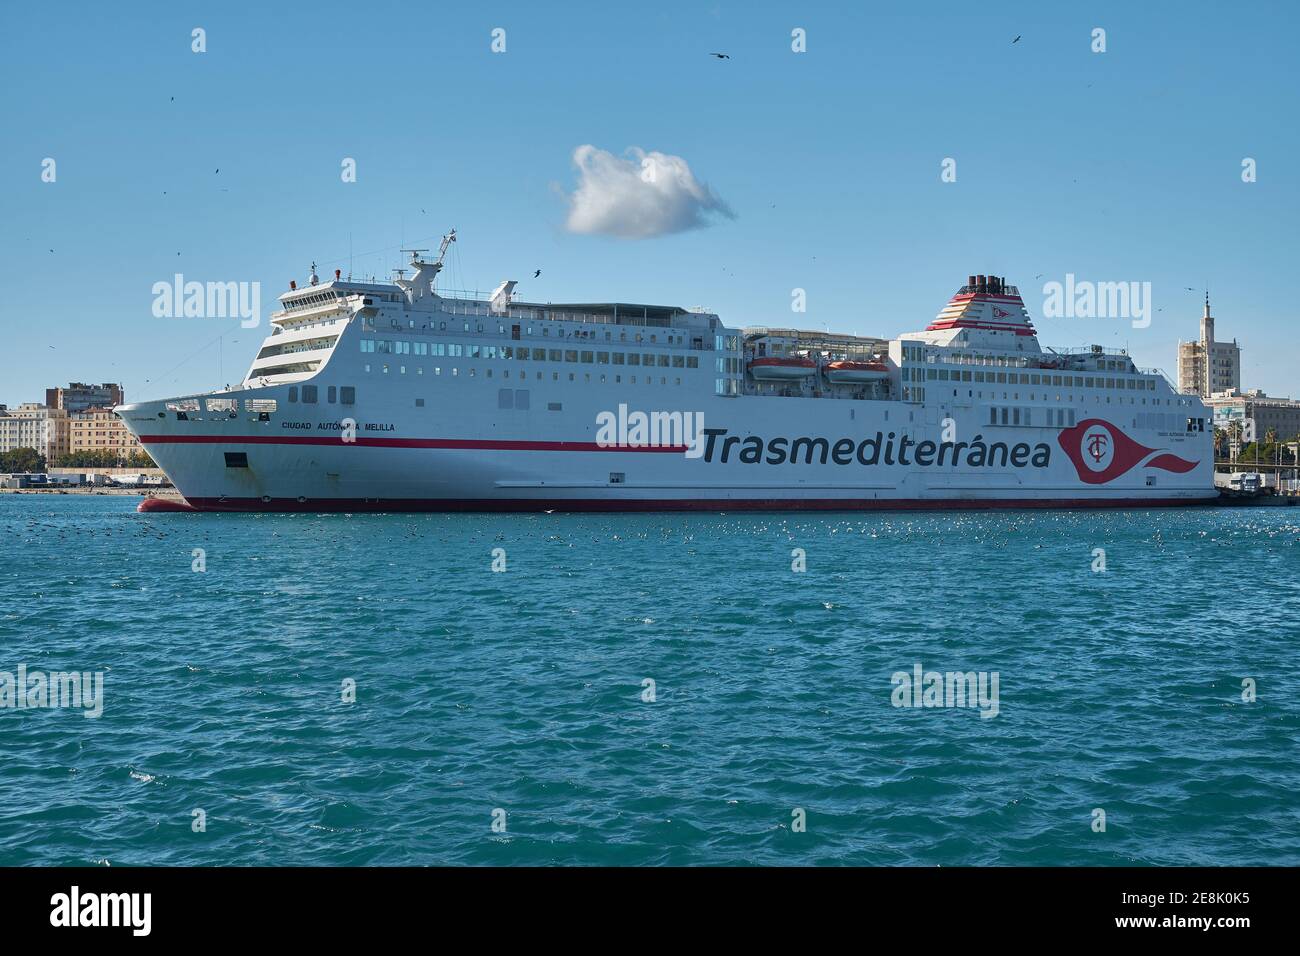 Transmediterranea, ferry between Malaga and Melilla, port of Malaga, Andalusia, Spain. Stock Photo